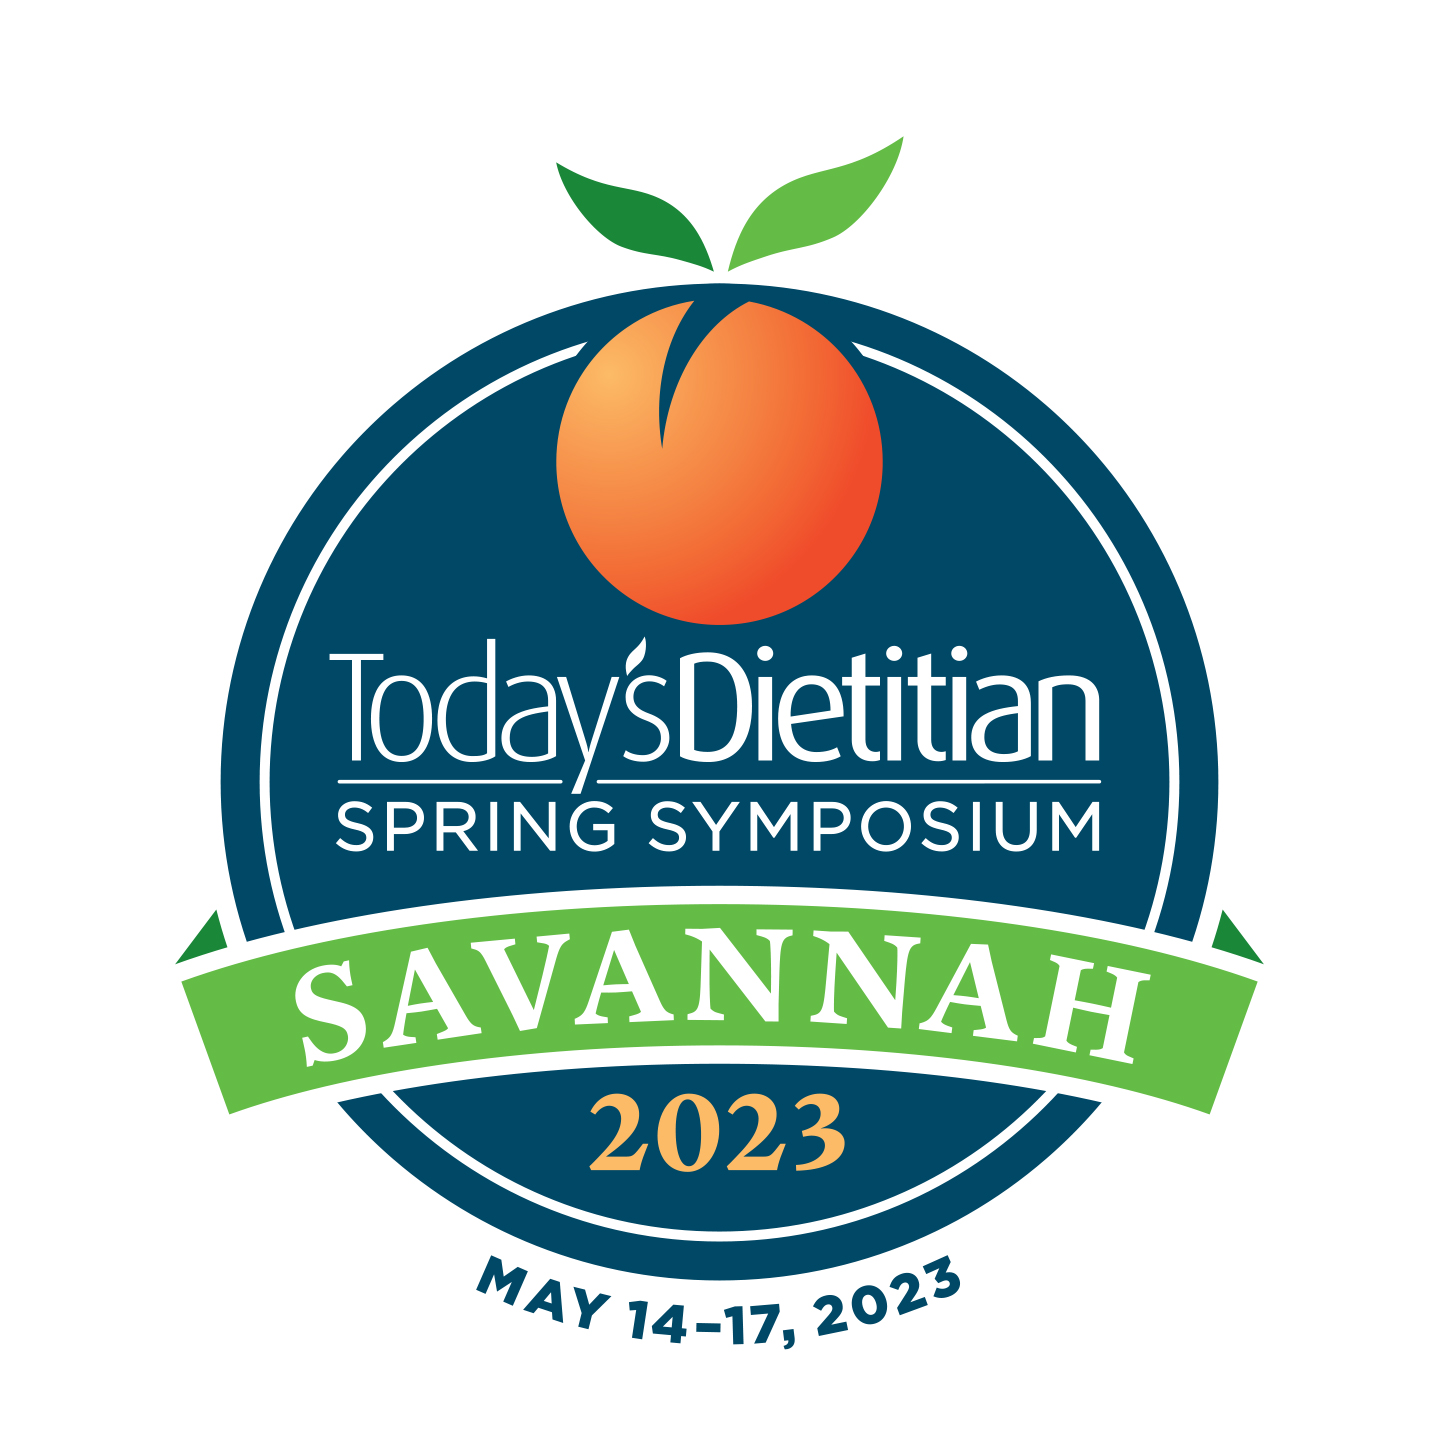 2023 Today's Dietitian Spring Symposium in Savannah, Georgia